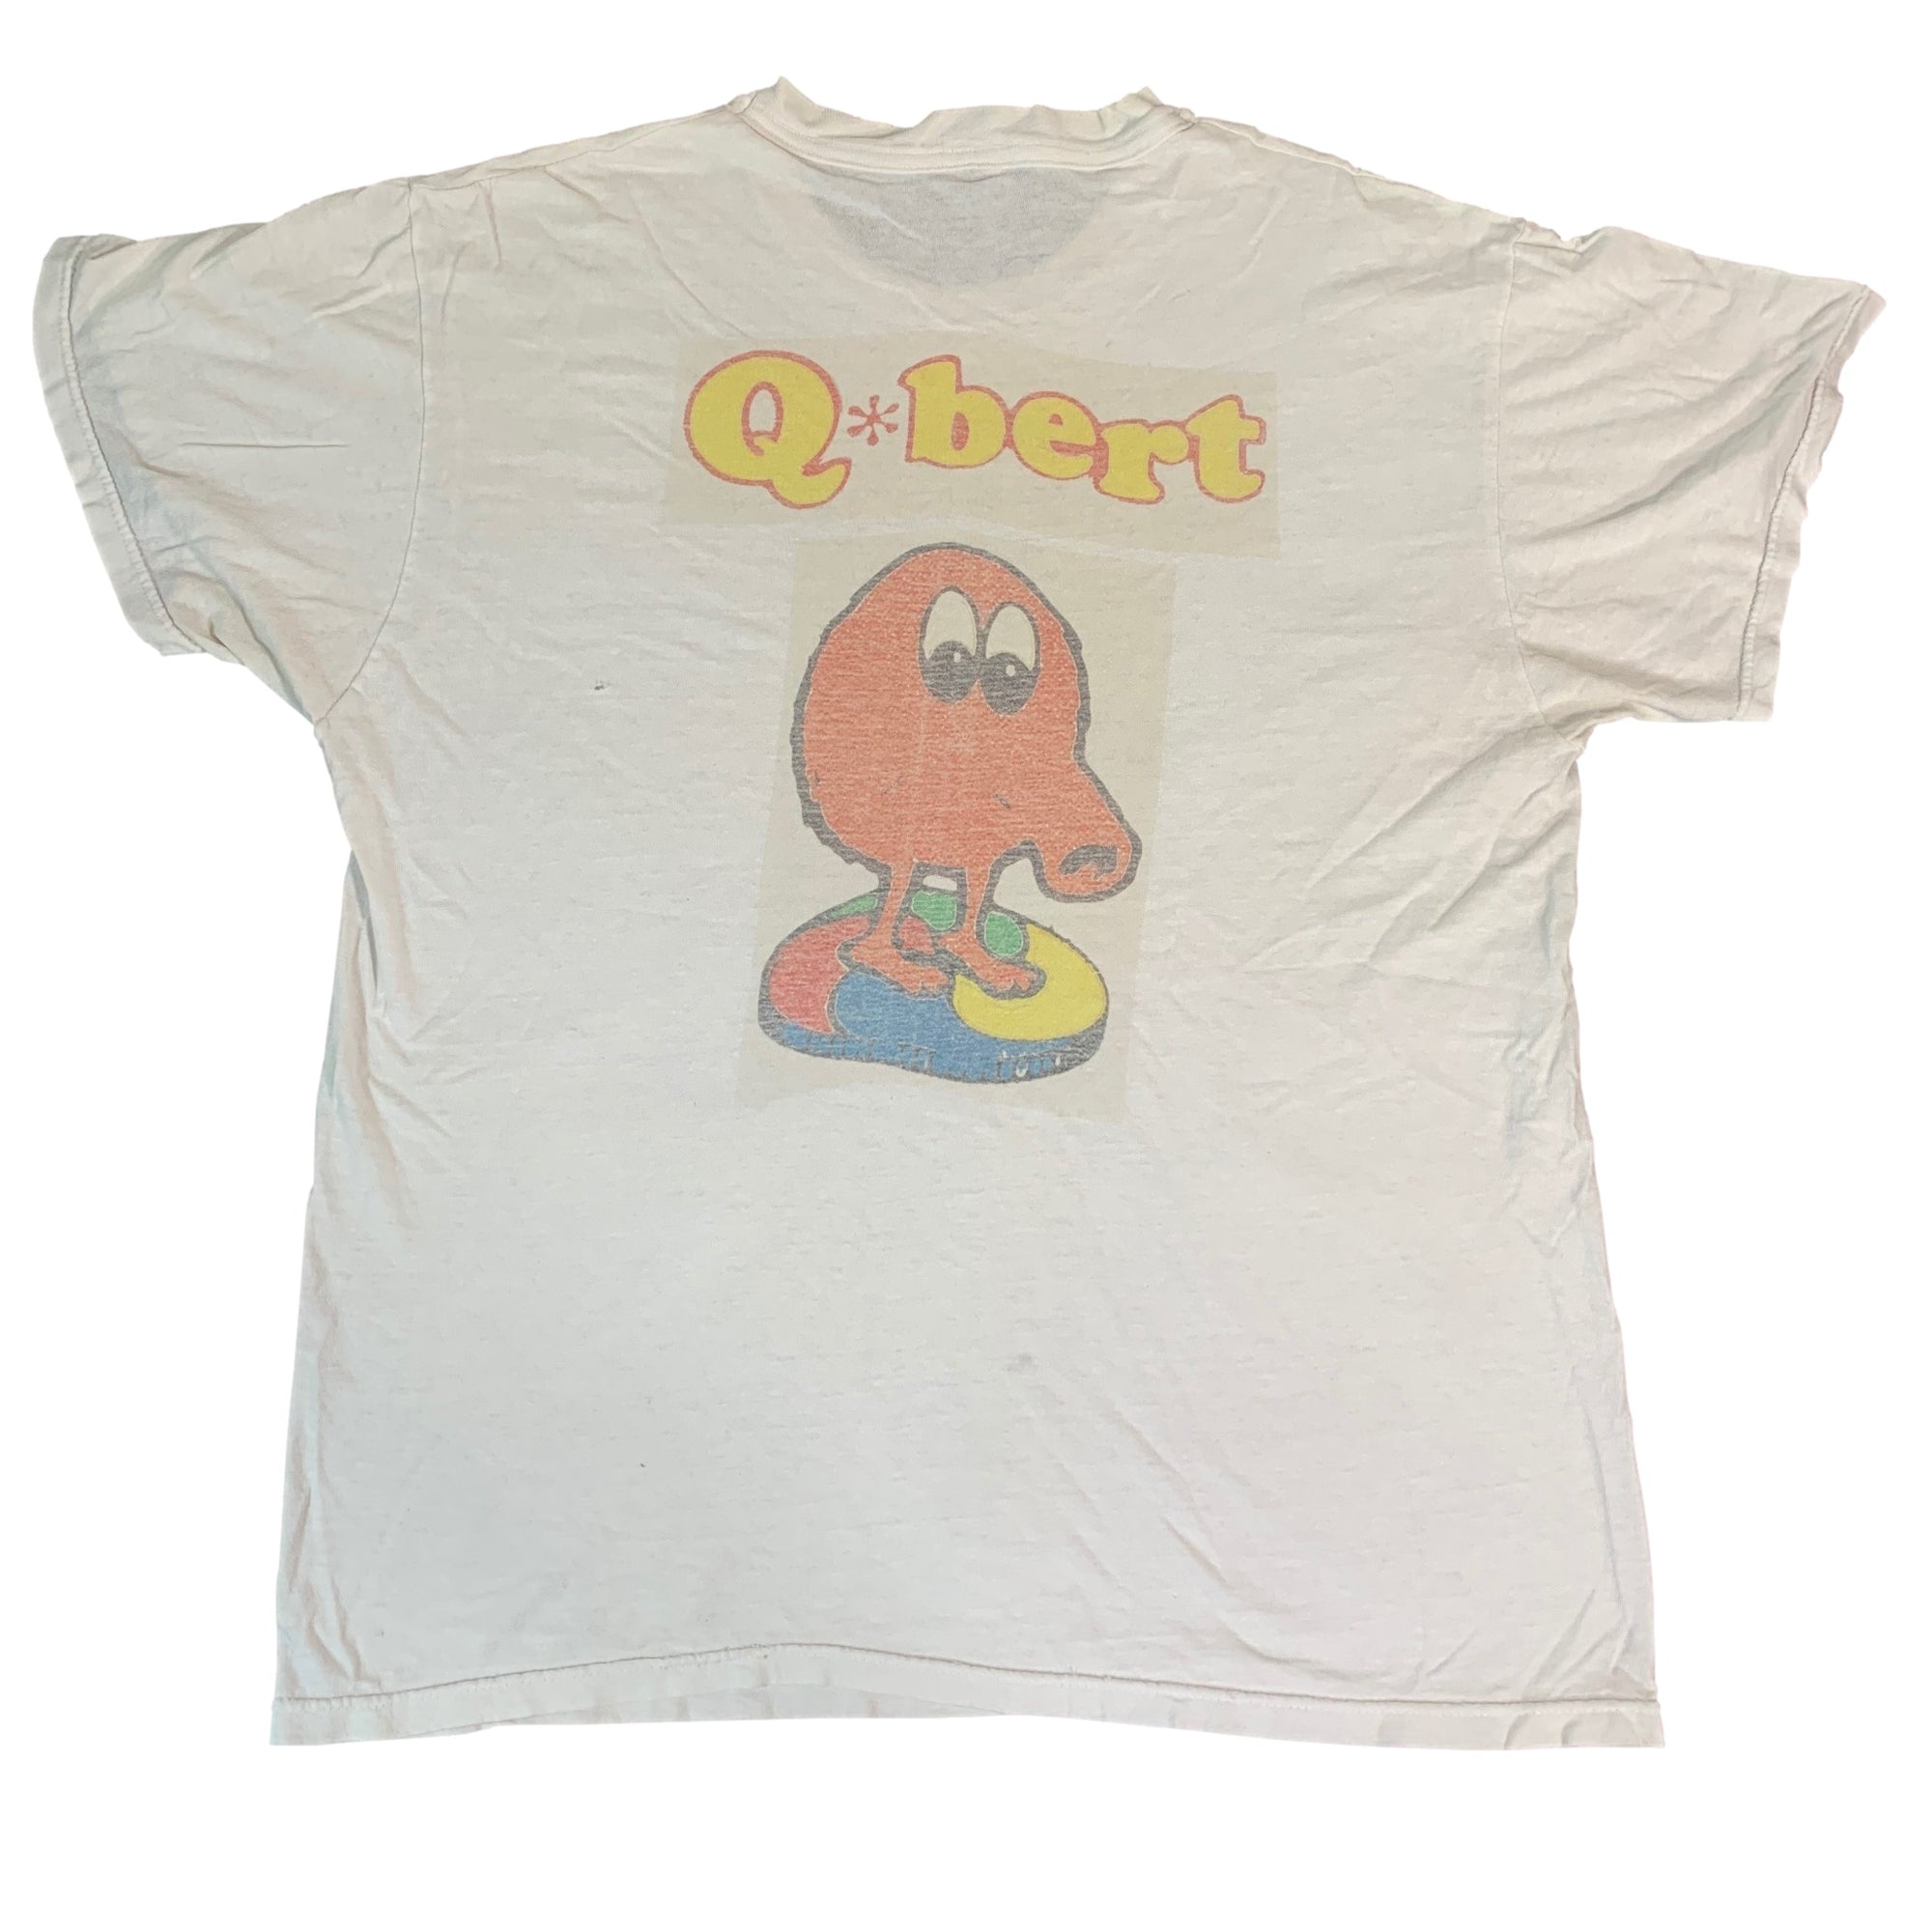 Vintage Q*bert "1982" T-Shirt - jointcustodydc